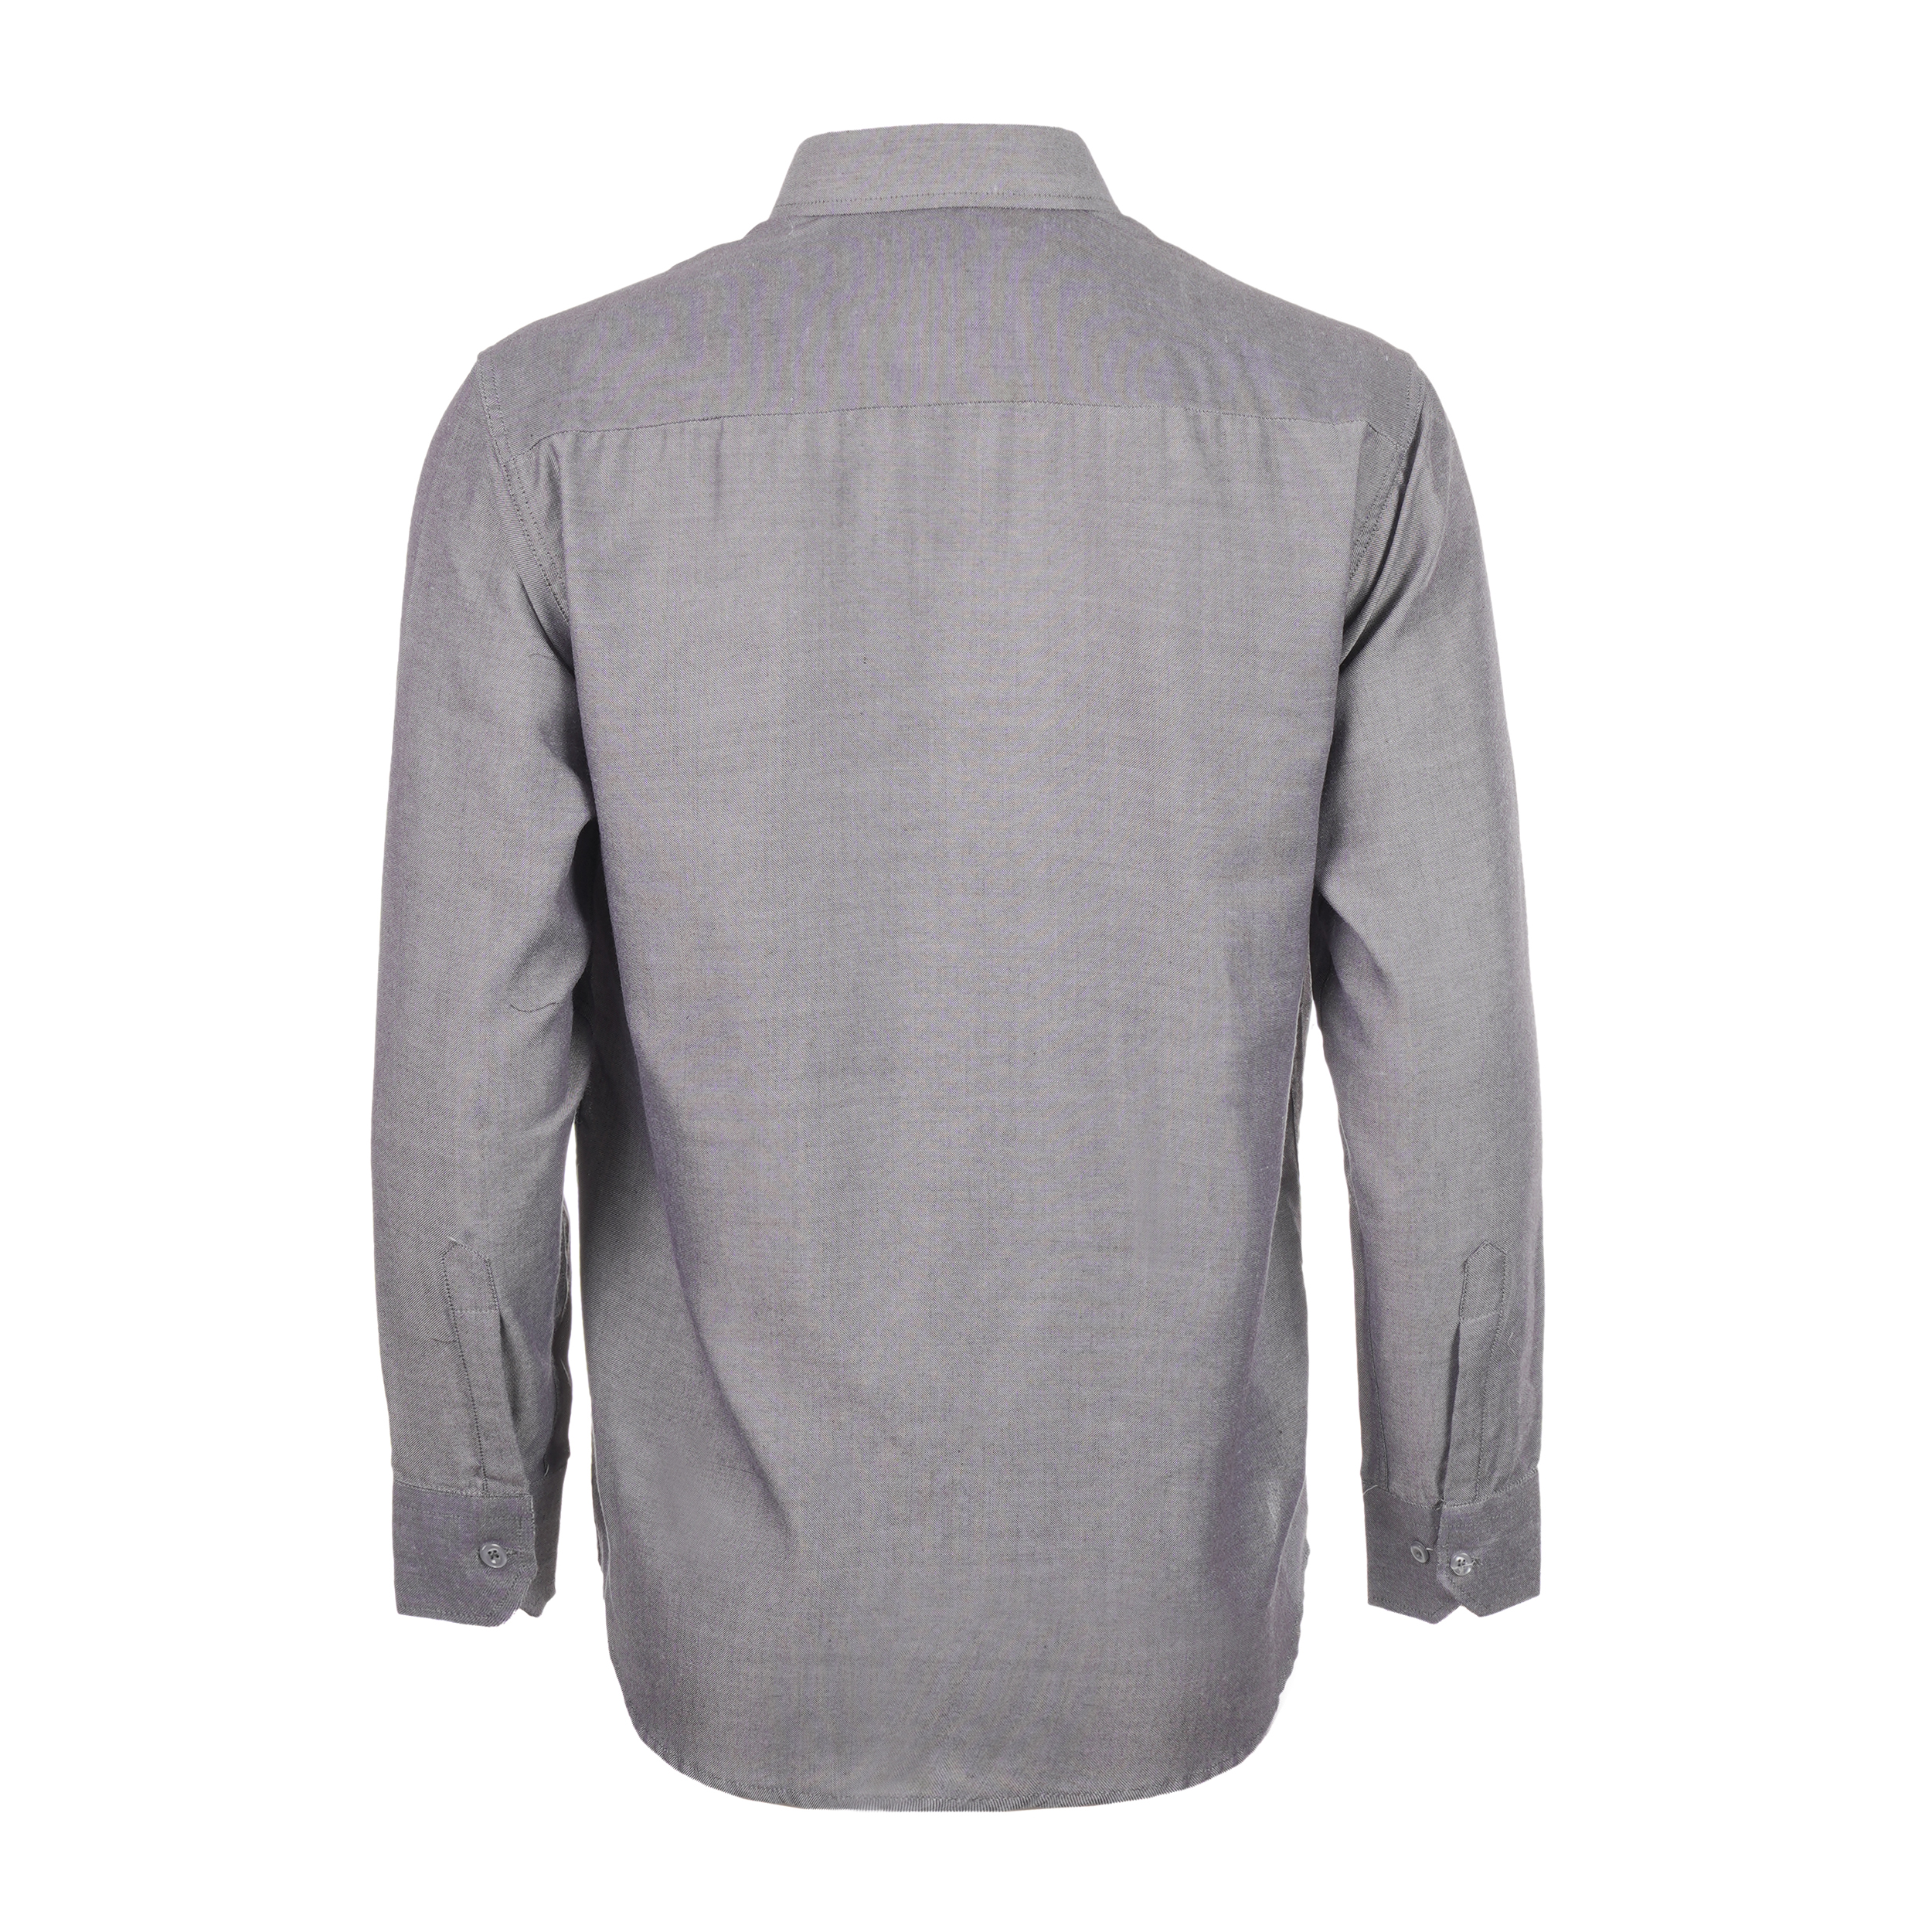 پیراهن آستین بلند مردانه ناوالس مدل Pk3-8020-GY -  - 3